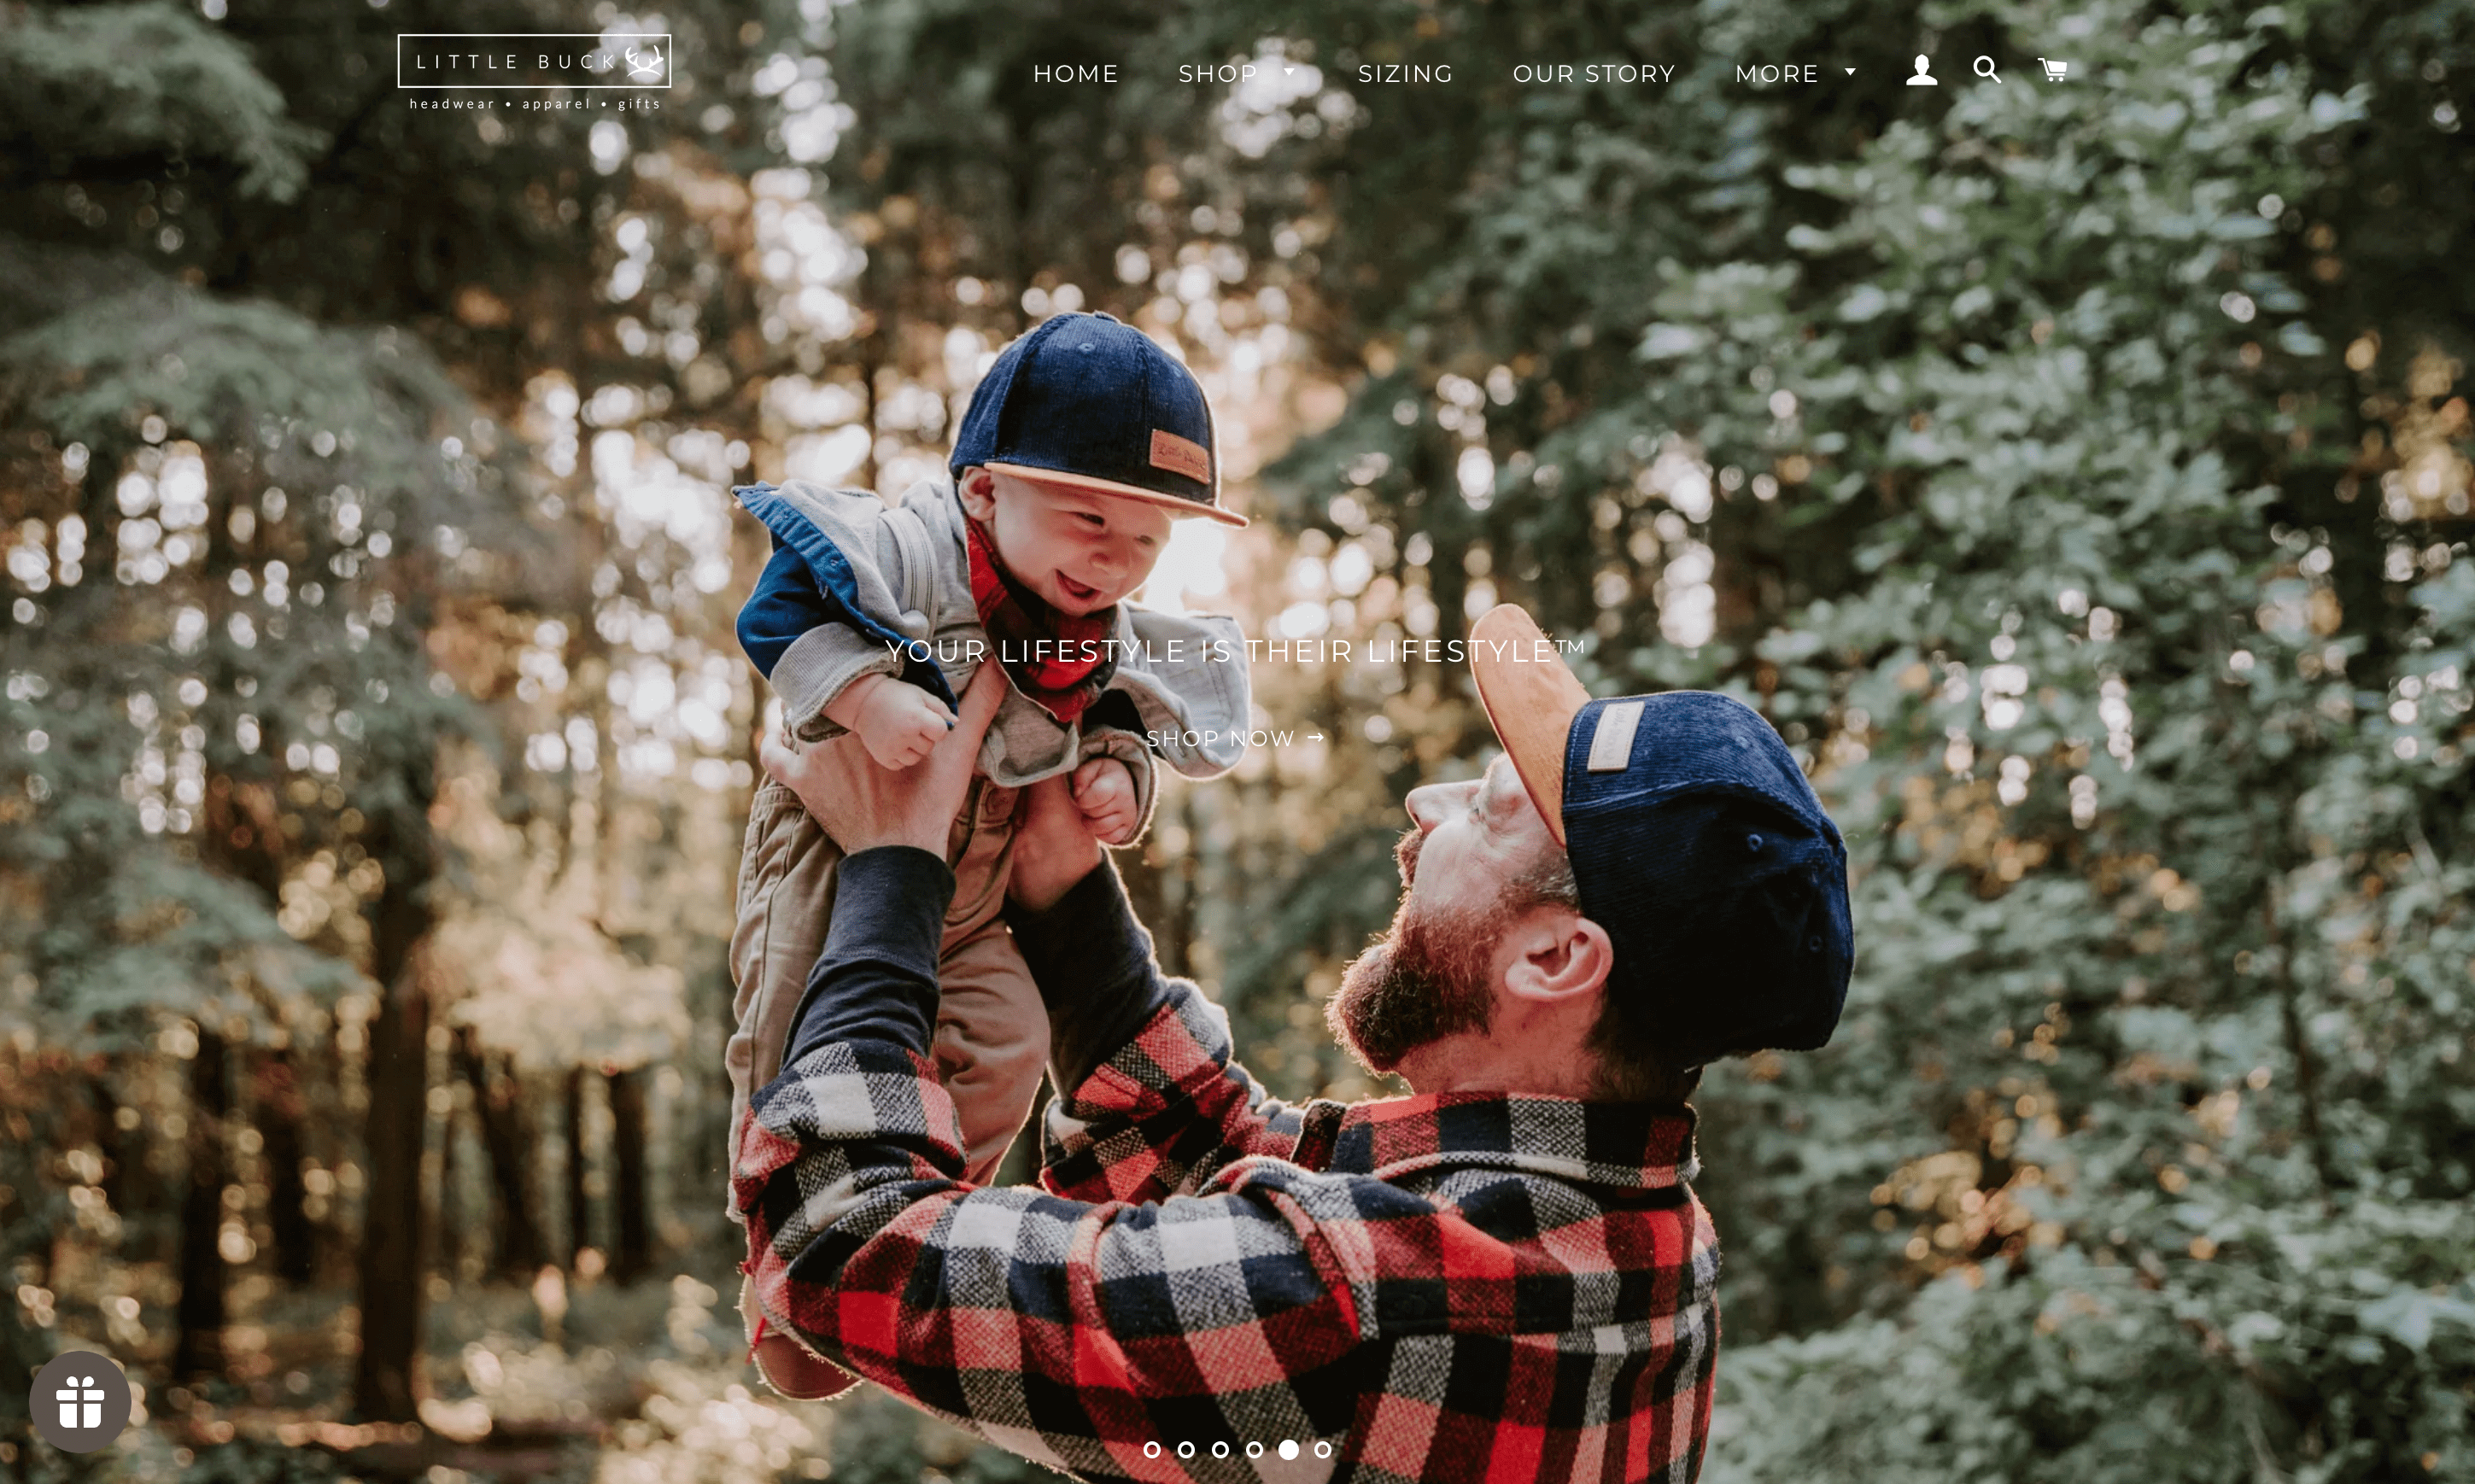 Little Buck 主页的屏幕截图显示，一位爸爸抱着他的孩子，戴着配套的后扣海军蓝色 Little Buck 帽子。